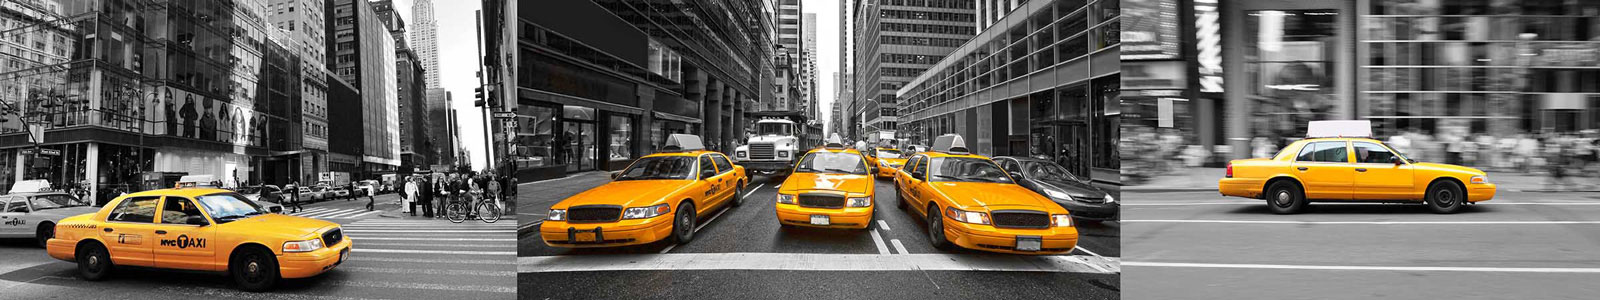 №3384 - Желтые такси на улицах Нью-Йорка